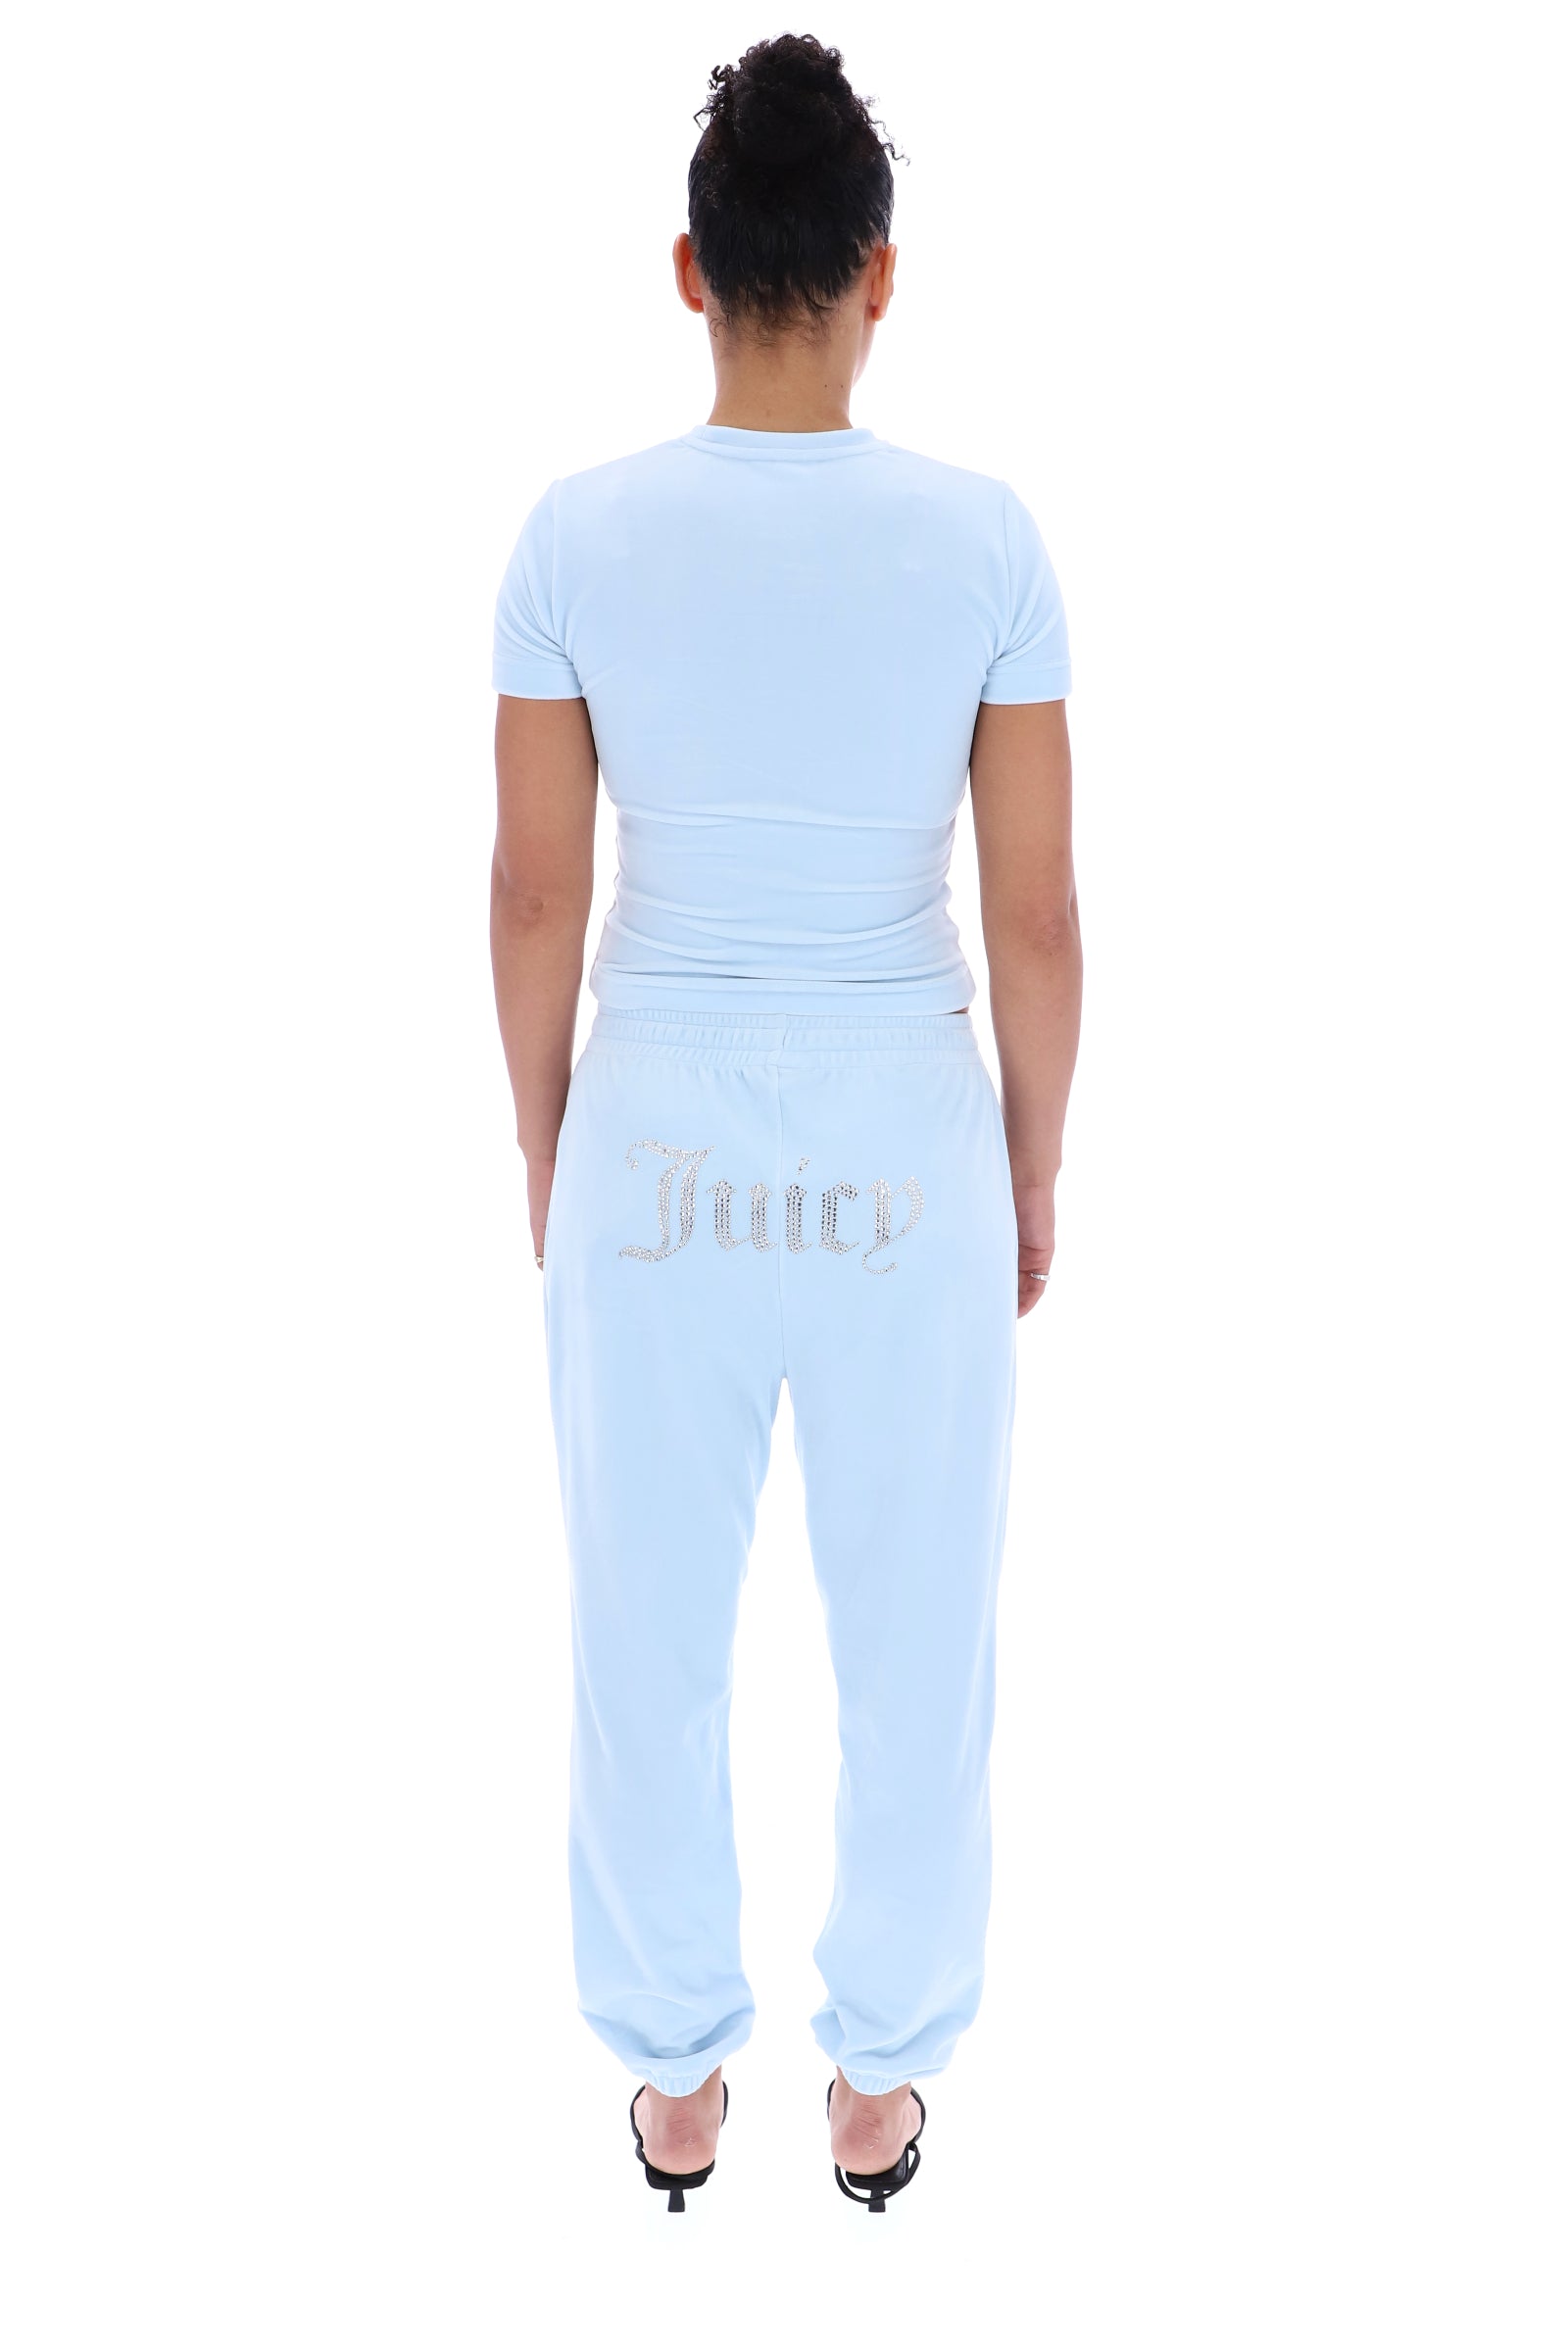 Juicy Couture T-shirt Donna VIJH70195 Breeze